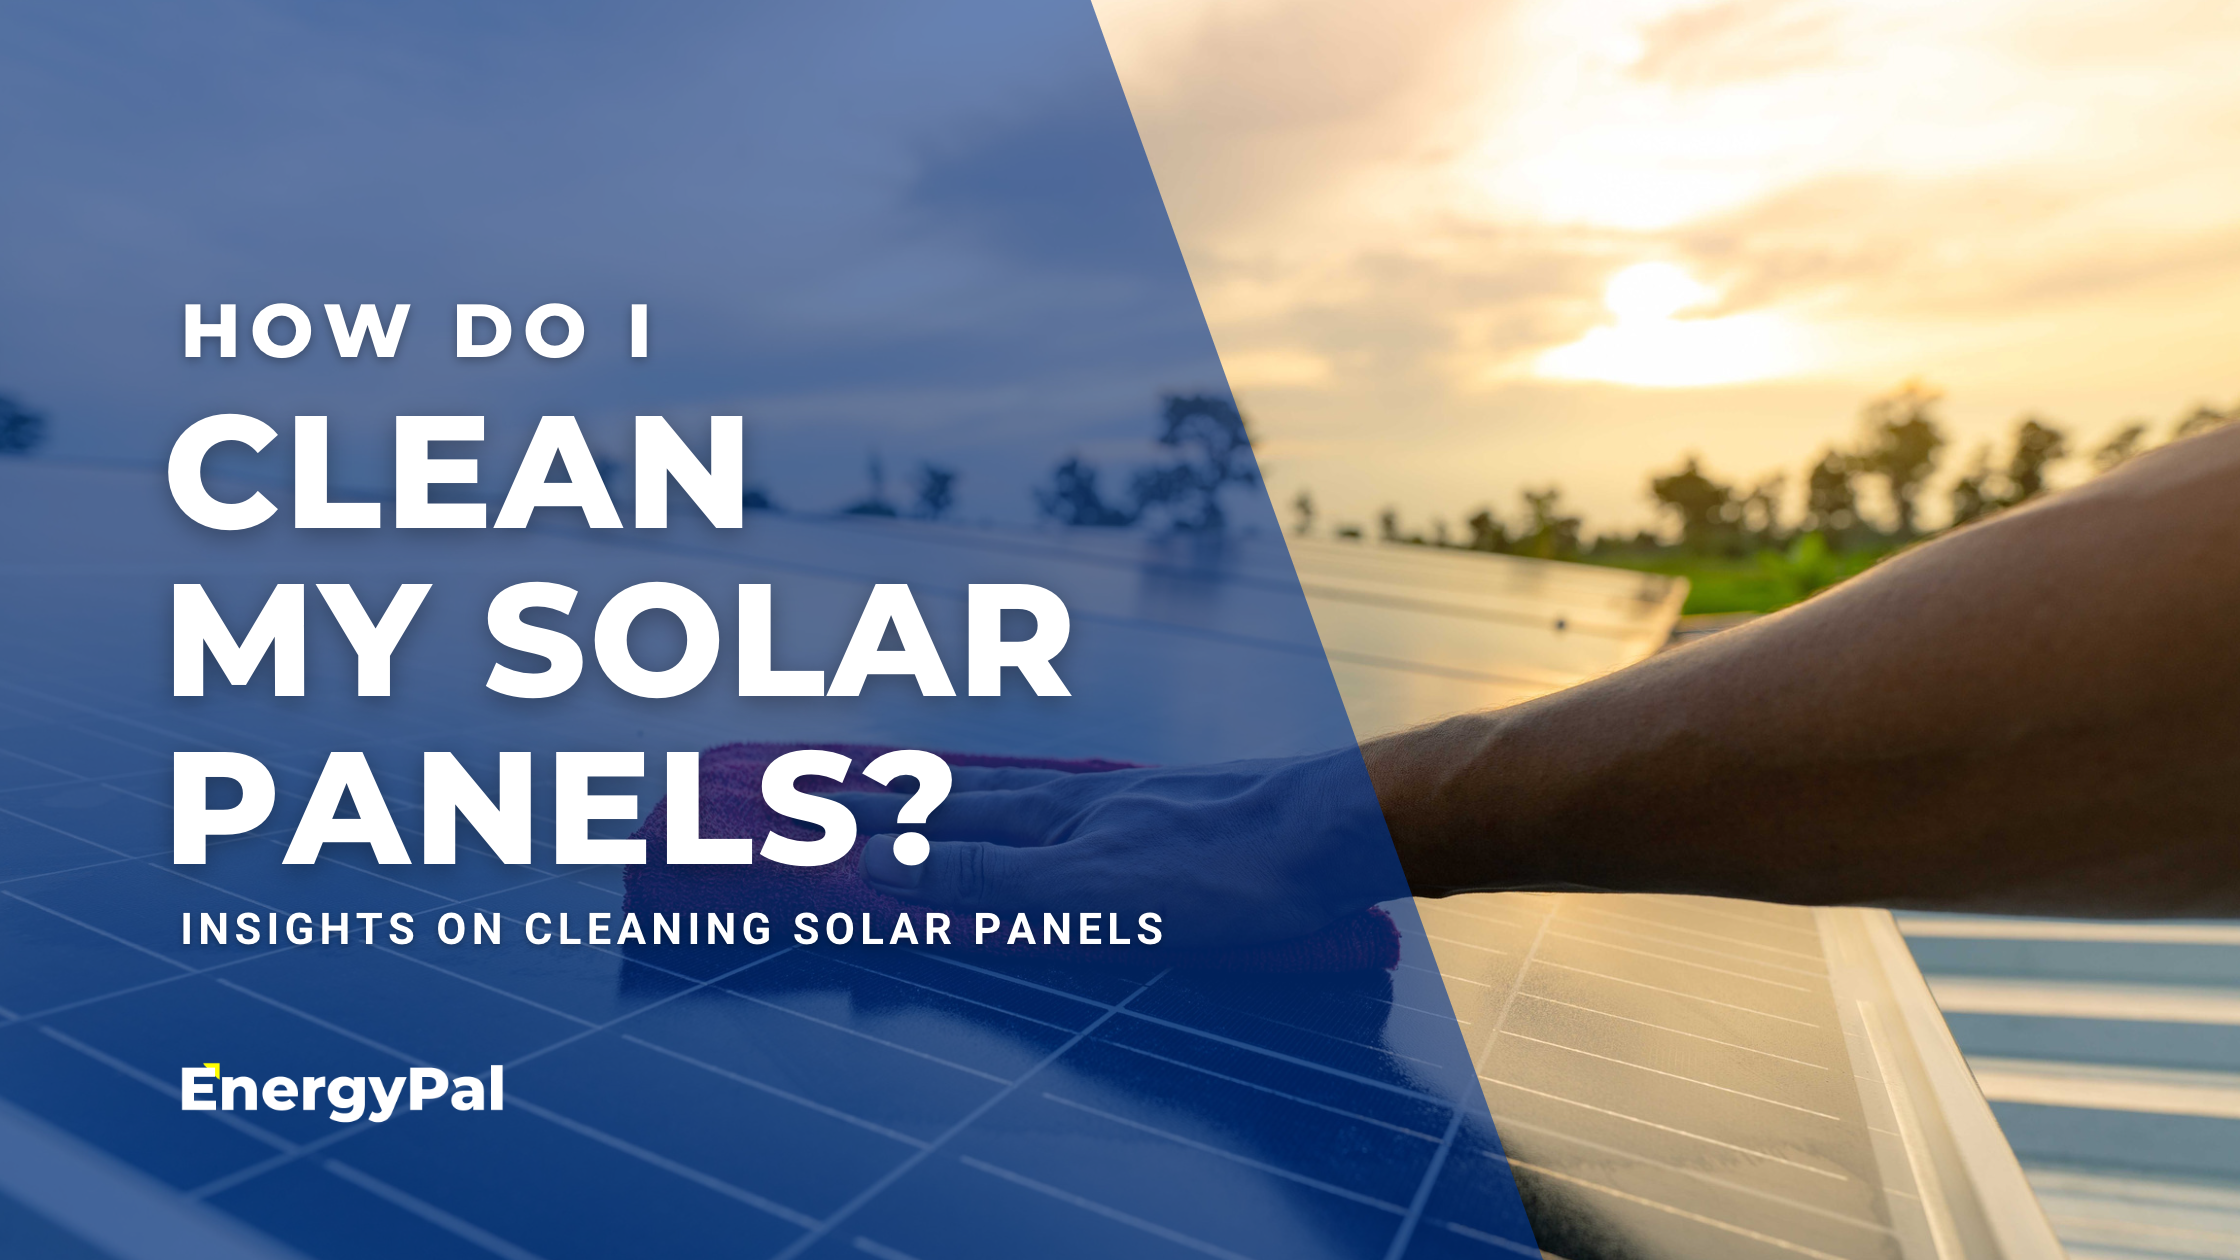 How do I clean my solar panels?